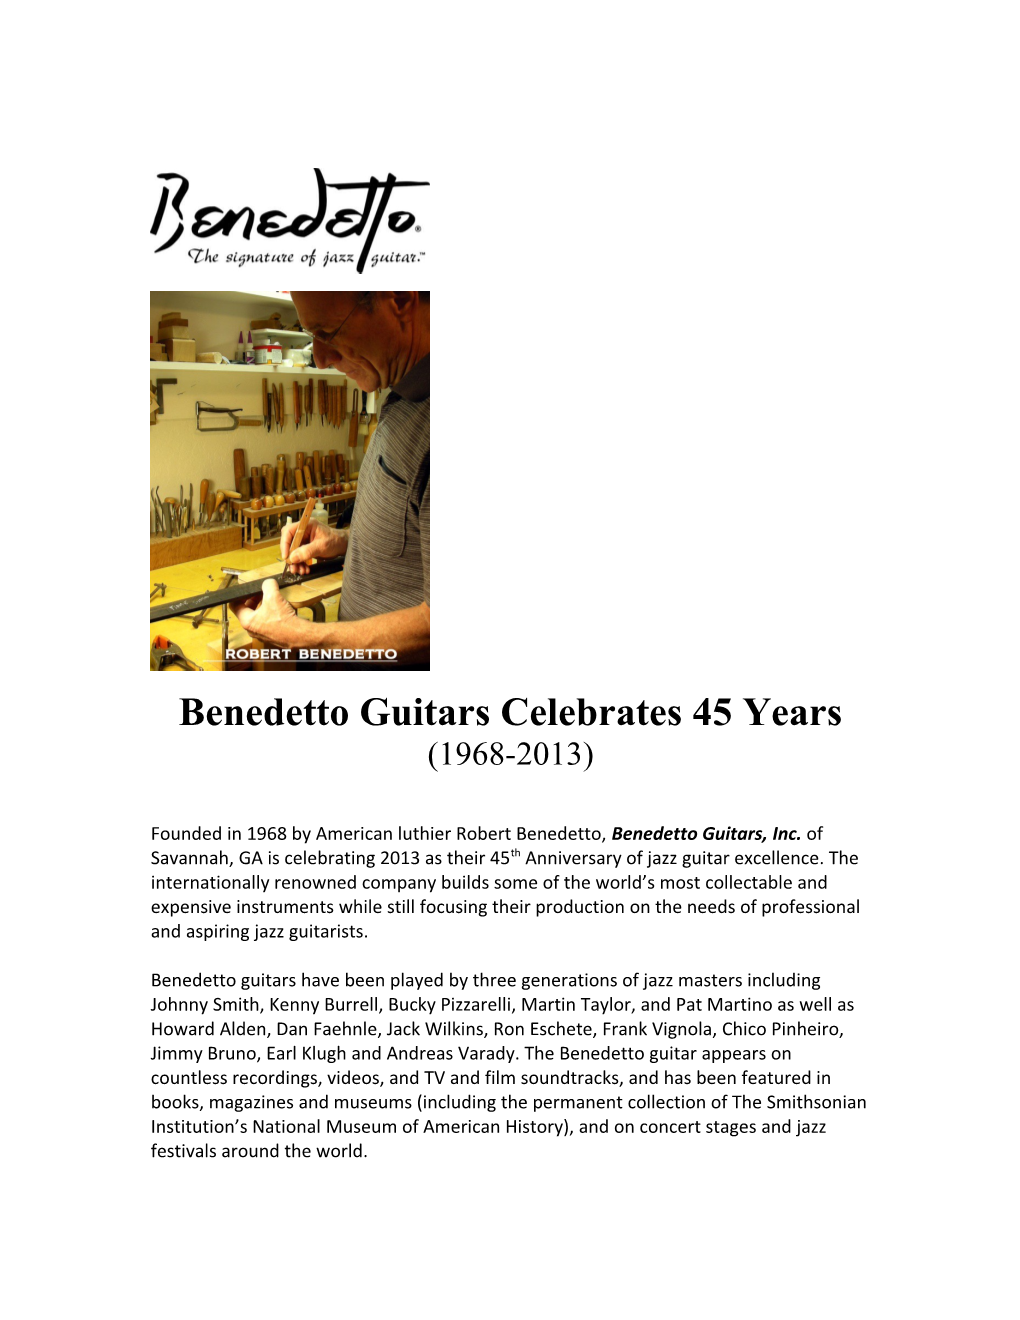 Benedetto Guitars Celebrates 45 Years (1968-2013)